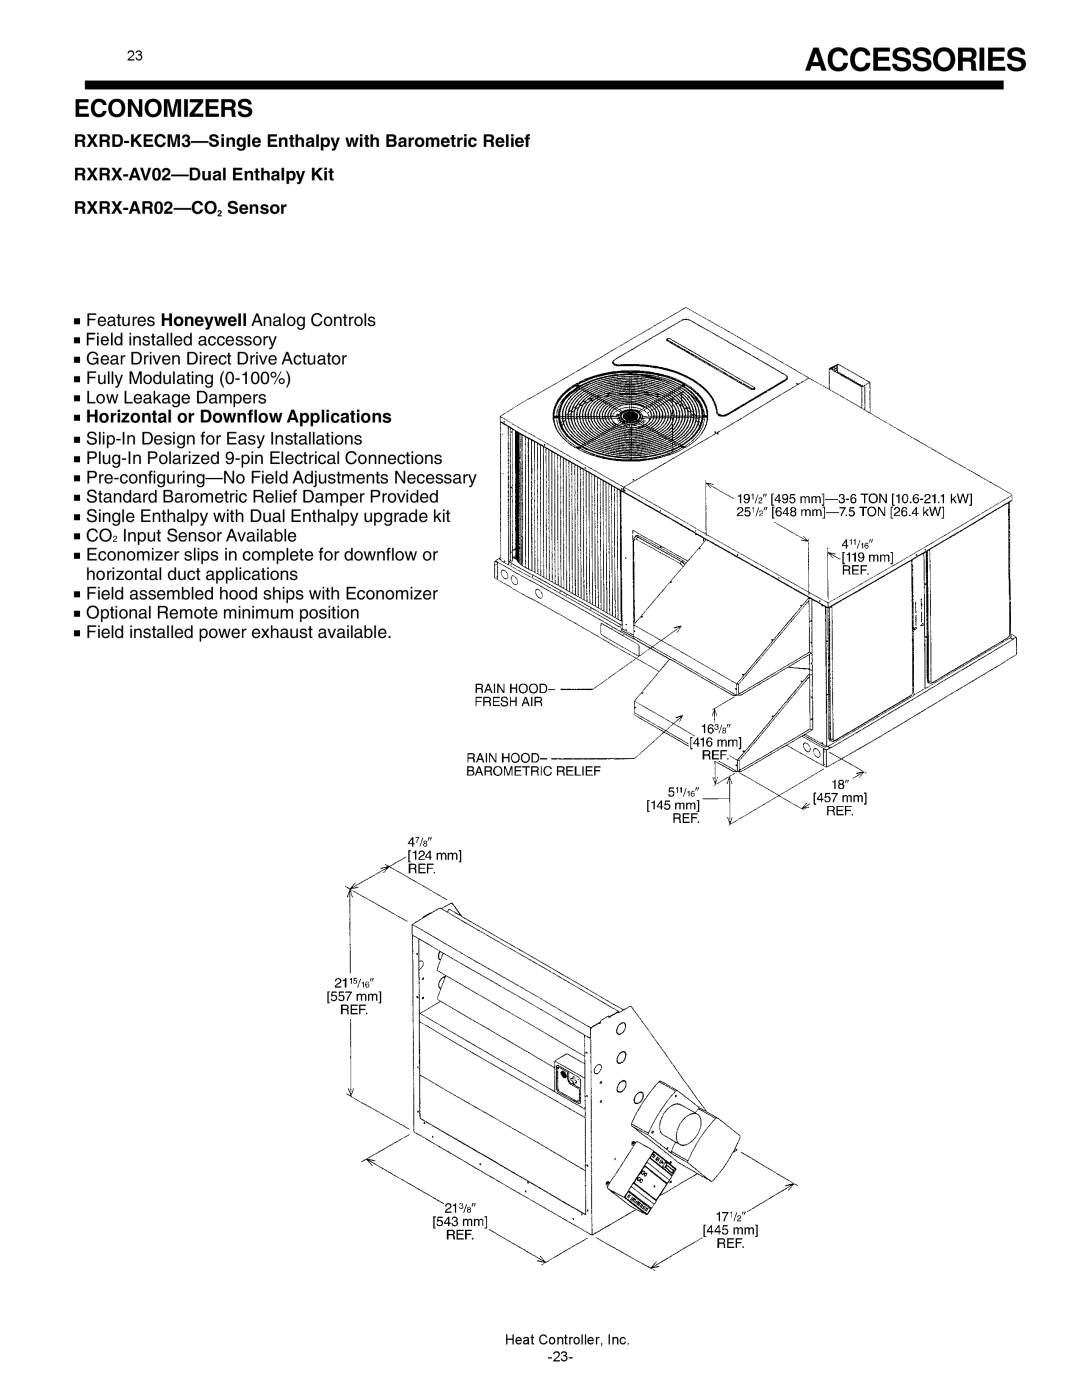 Heat Controller TGC048C-4K-135, TGC060C-4K-135 Economizers, Accessories, RXRD-KECM3-SingleEnthalpy with Barometric Relief 